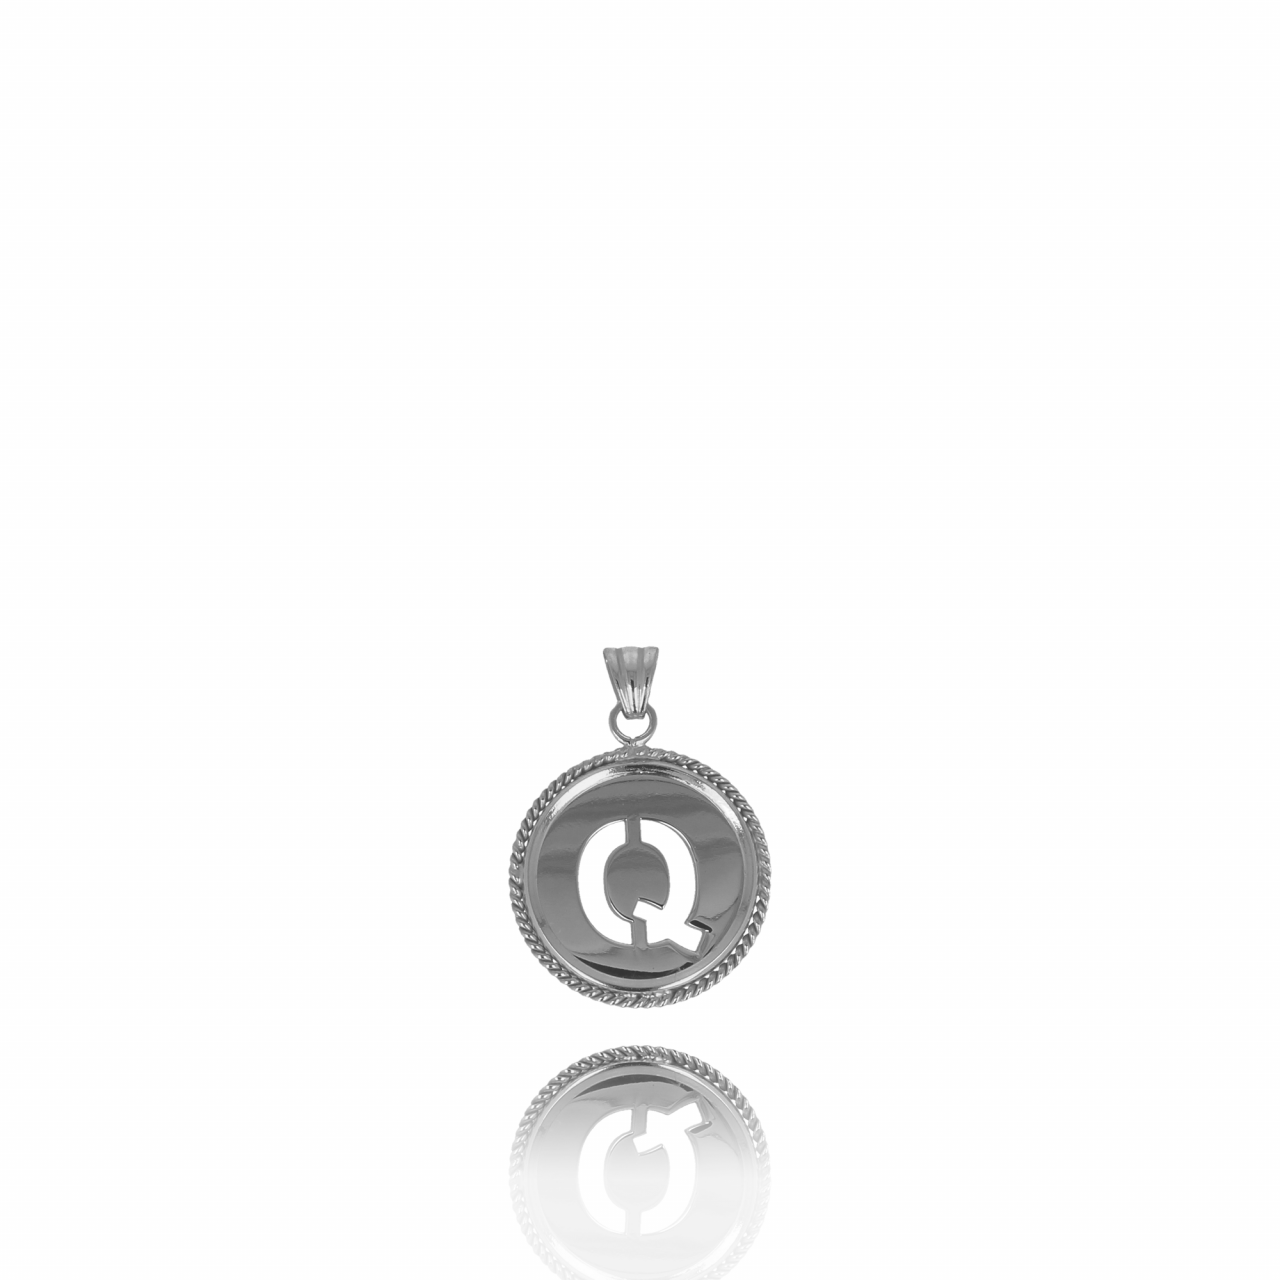 Zilveren Initial Medallion pendantlott-theme.productDescriptionPage.SEO.byTheBrand